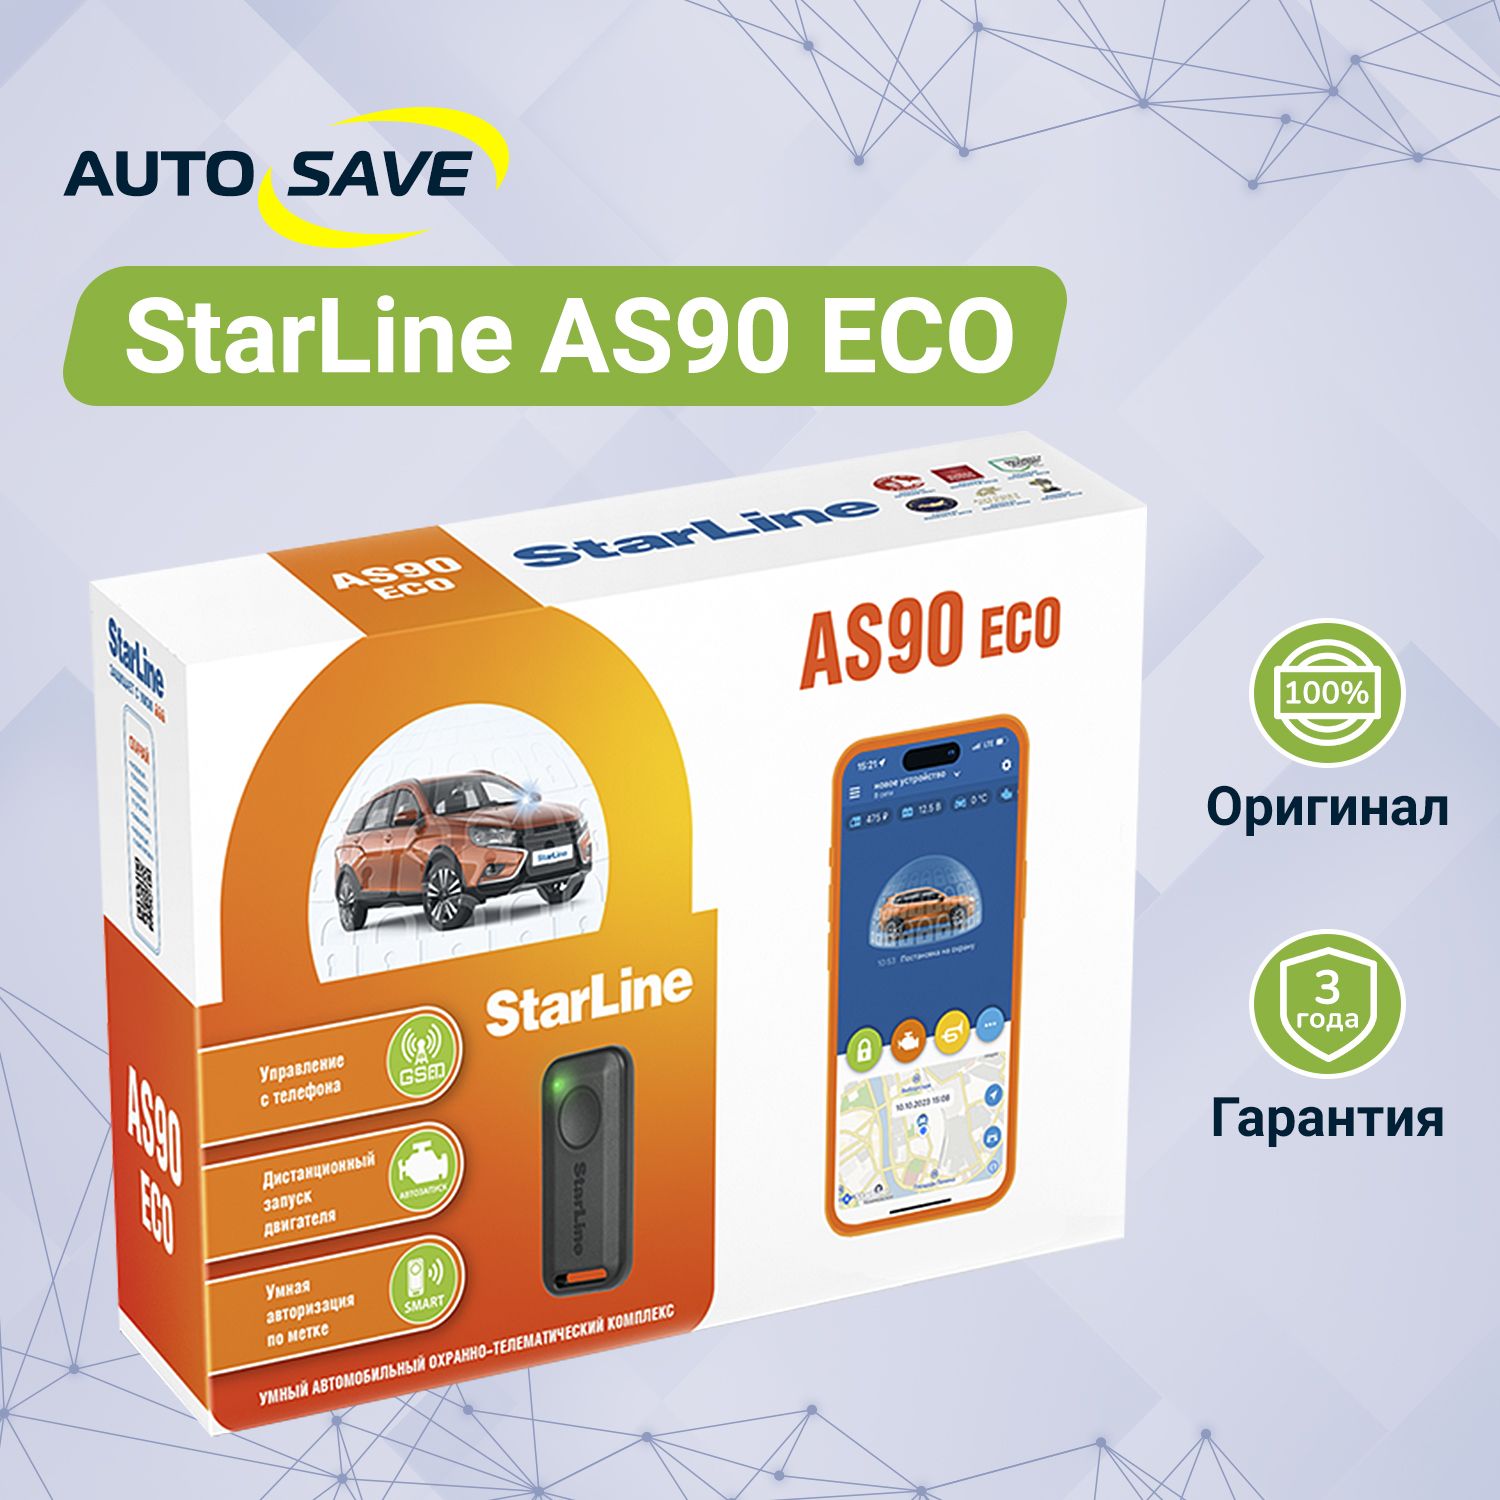 StarlineAS90ECOавтосигнализациясавтозапускомстелефона